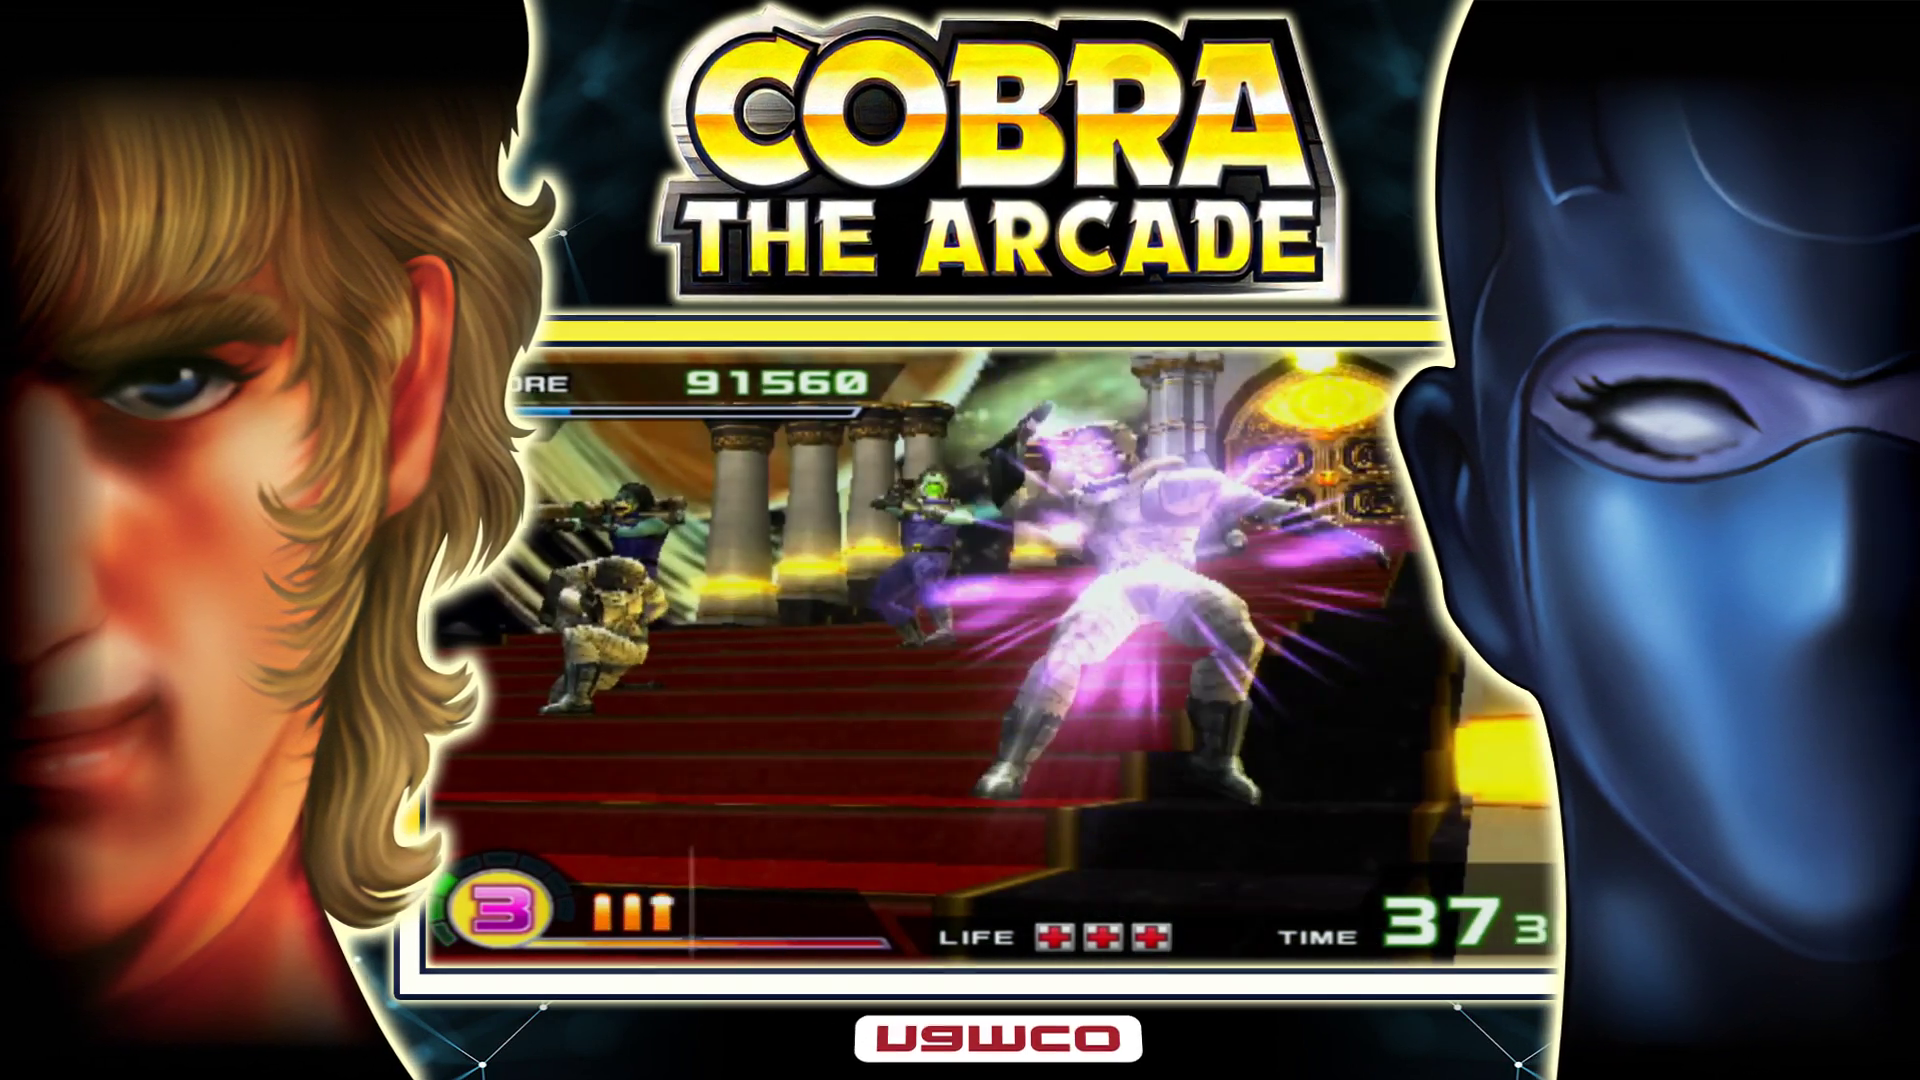 Cobra The Arcade - Arcade - LaunchBox Community Forums